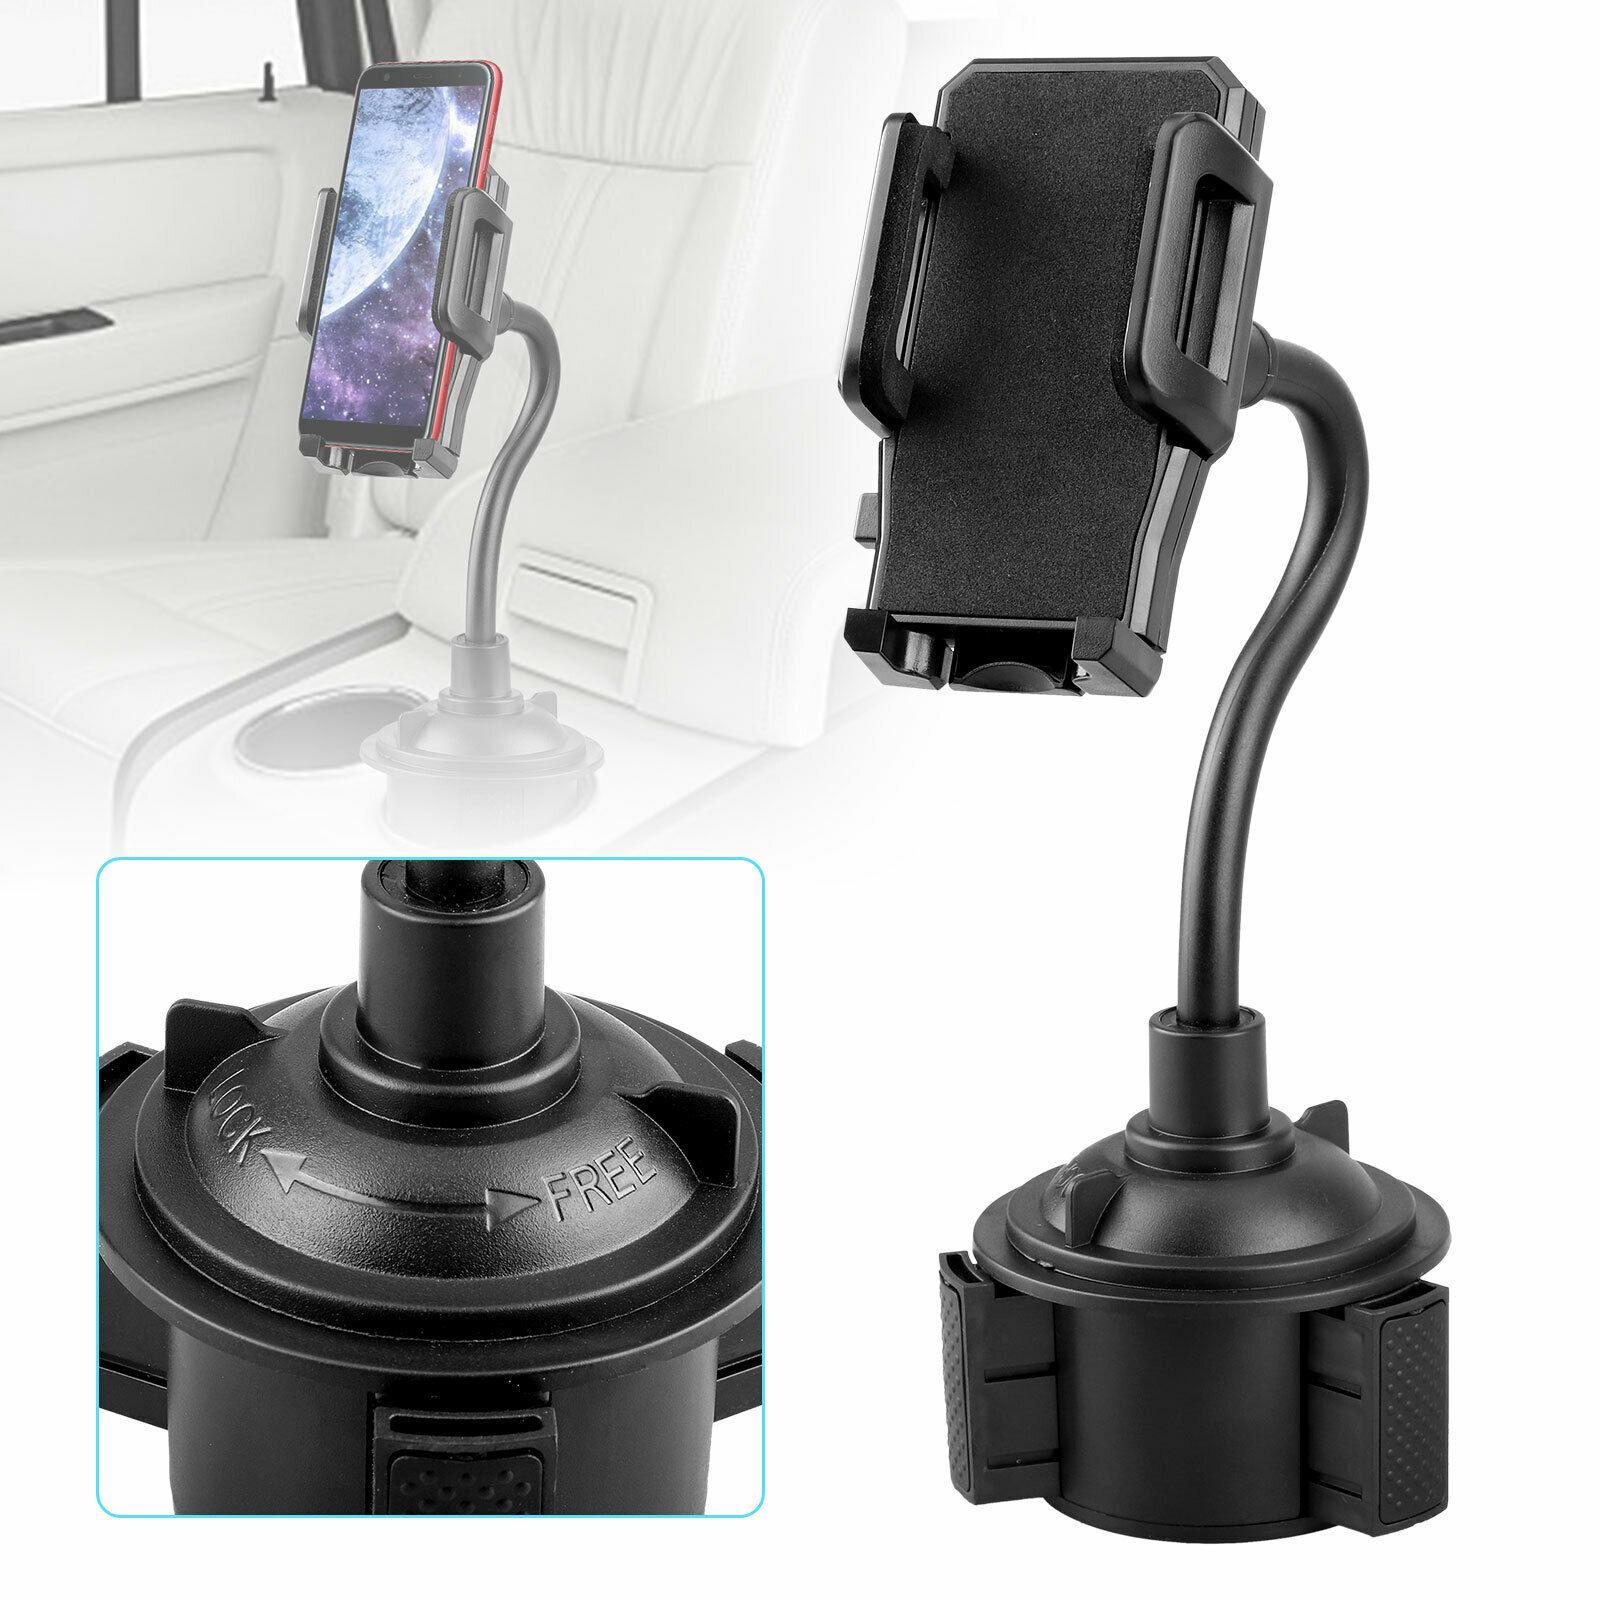 Universal Adjustable Car Cup Holder Stand Cradle Mount For iPhone Samsung